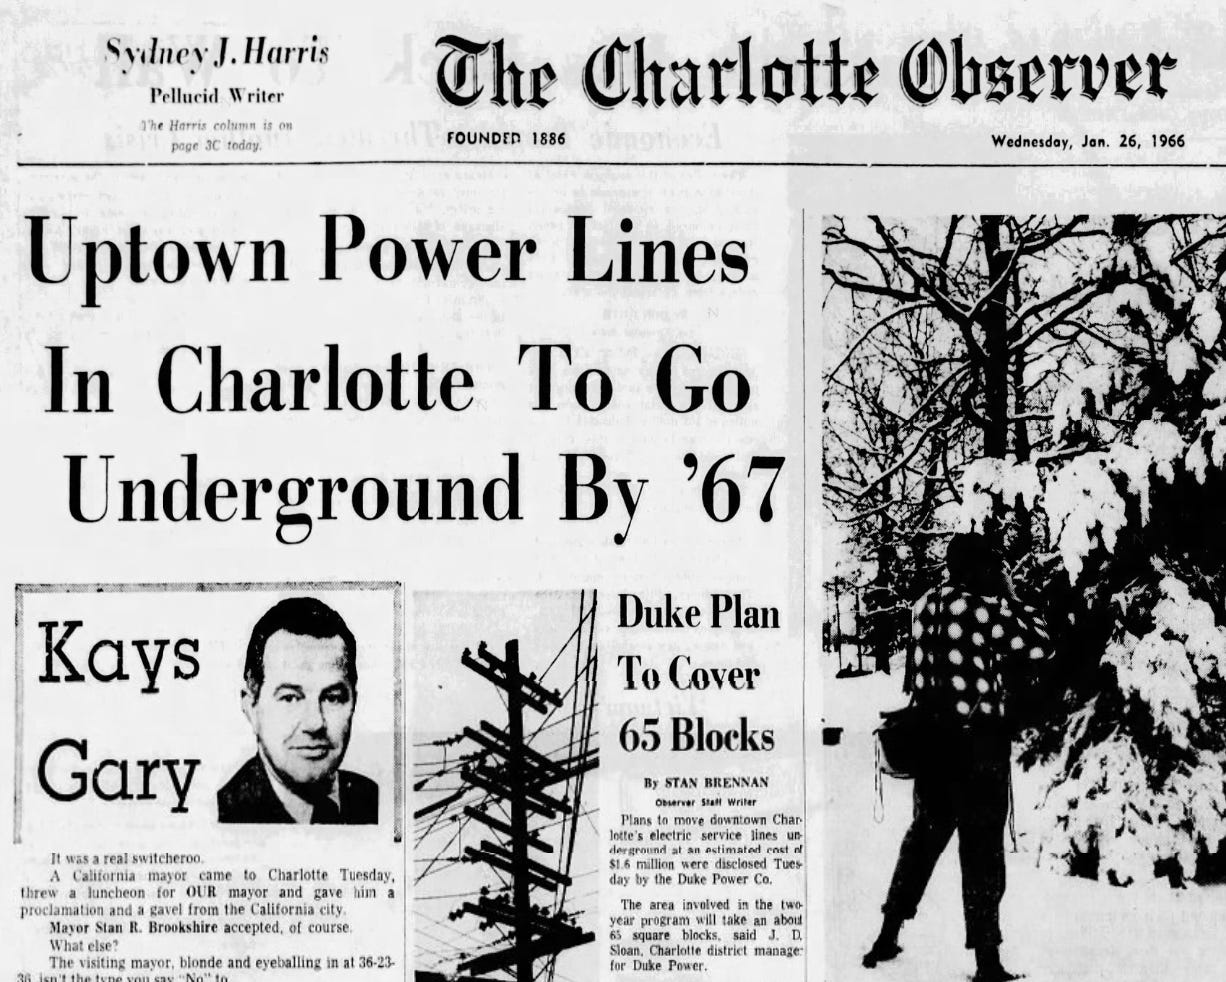 Charlotte Observer headline: "Uptown Power Lines in Charlotte To Go Underground by '67"